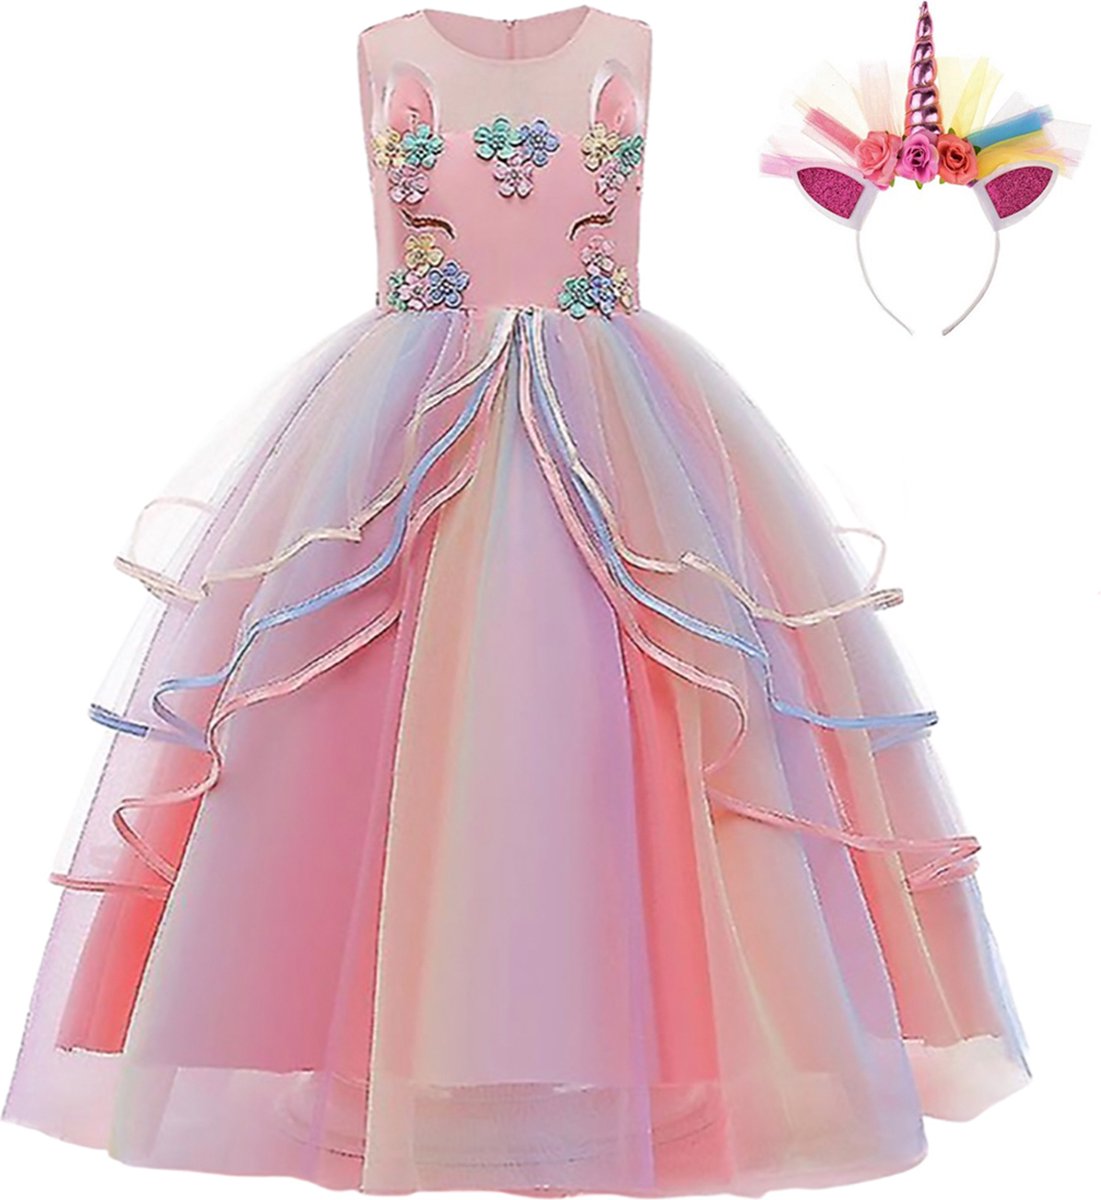 Unicorn Jurk | Eenhoorn Jurk | Prinsessenjurk Meisje | Verkleedkleren Meisje |maat 146/152| Prinsessen Verkleedkleding | Carnavalskleding Kinderen |+ Haarband | Roze